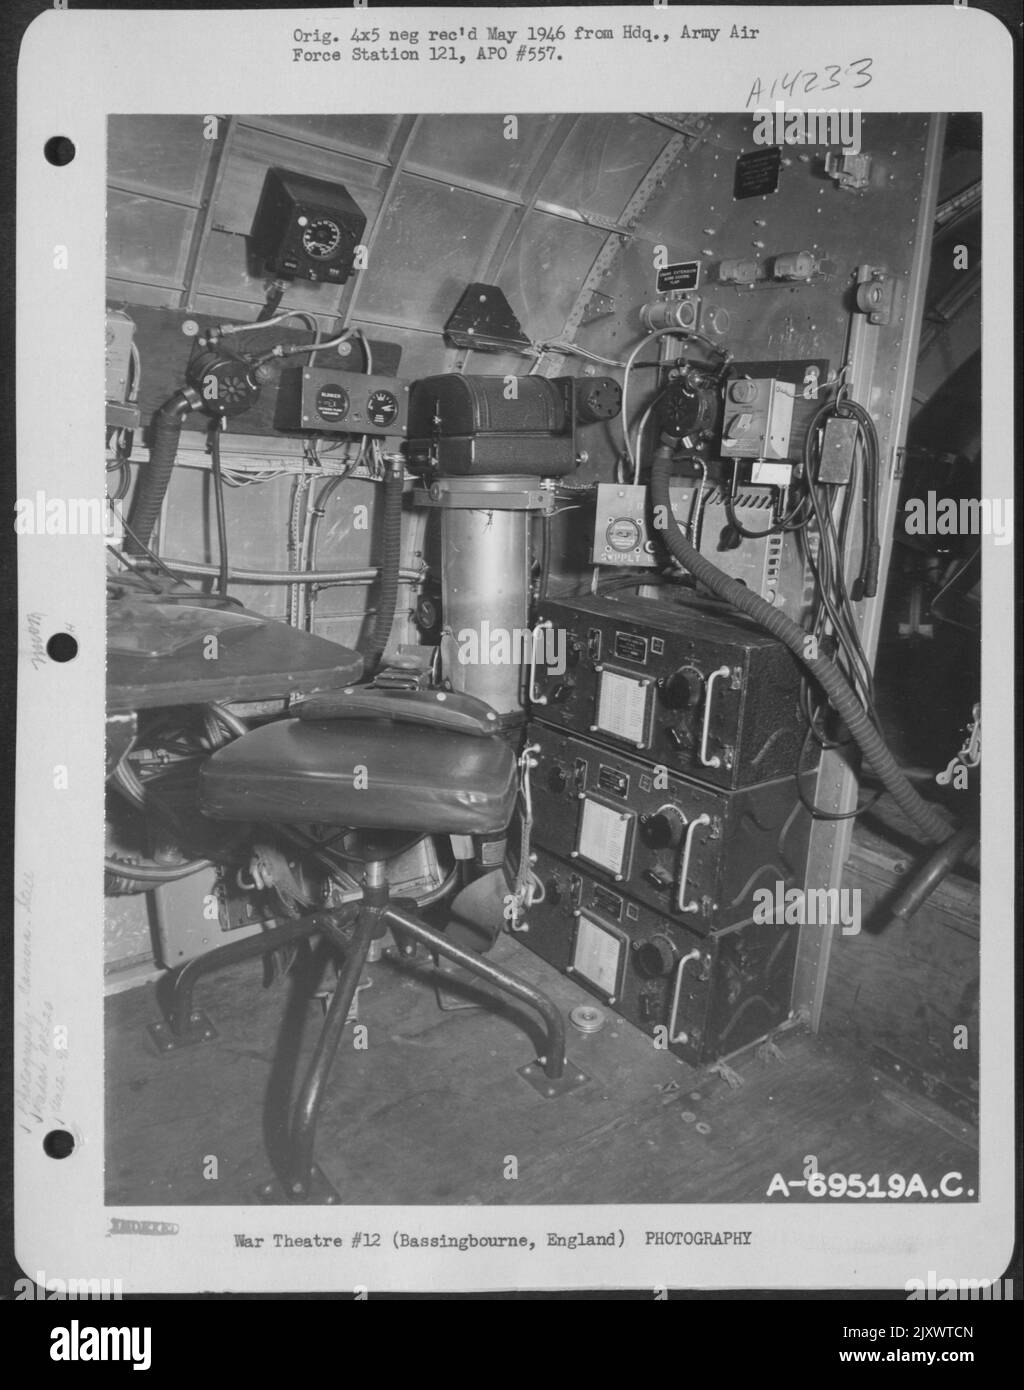 An aps 20 radar hi-res stock photography and images - Alamy